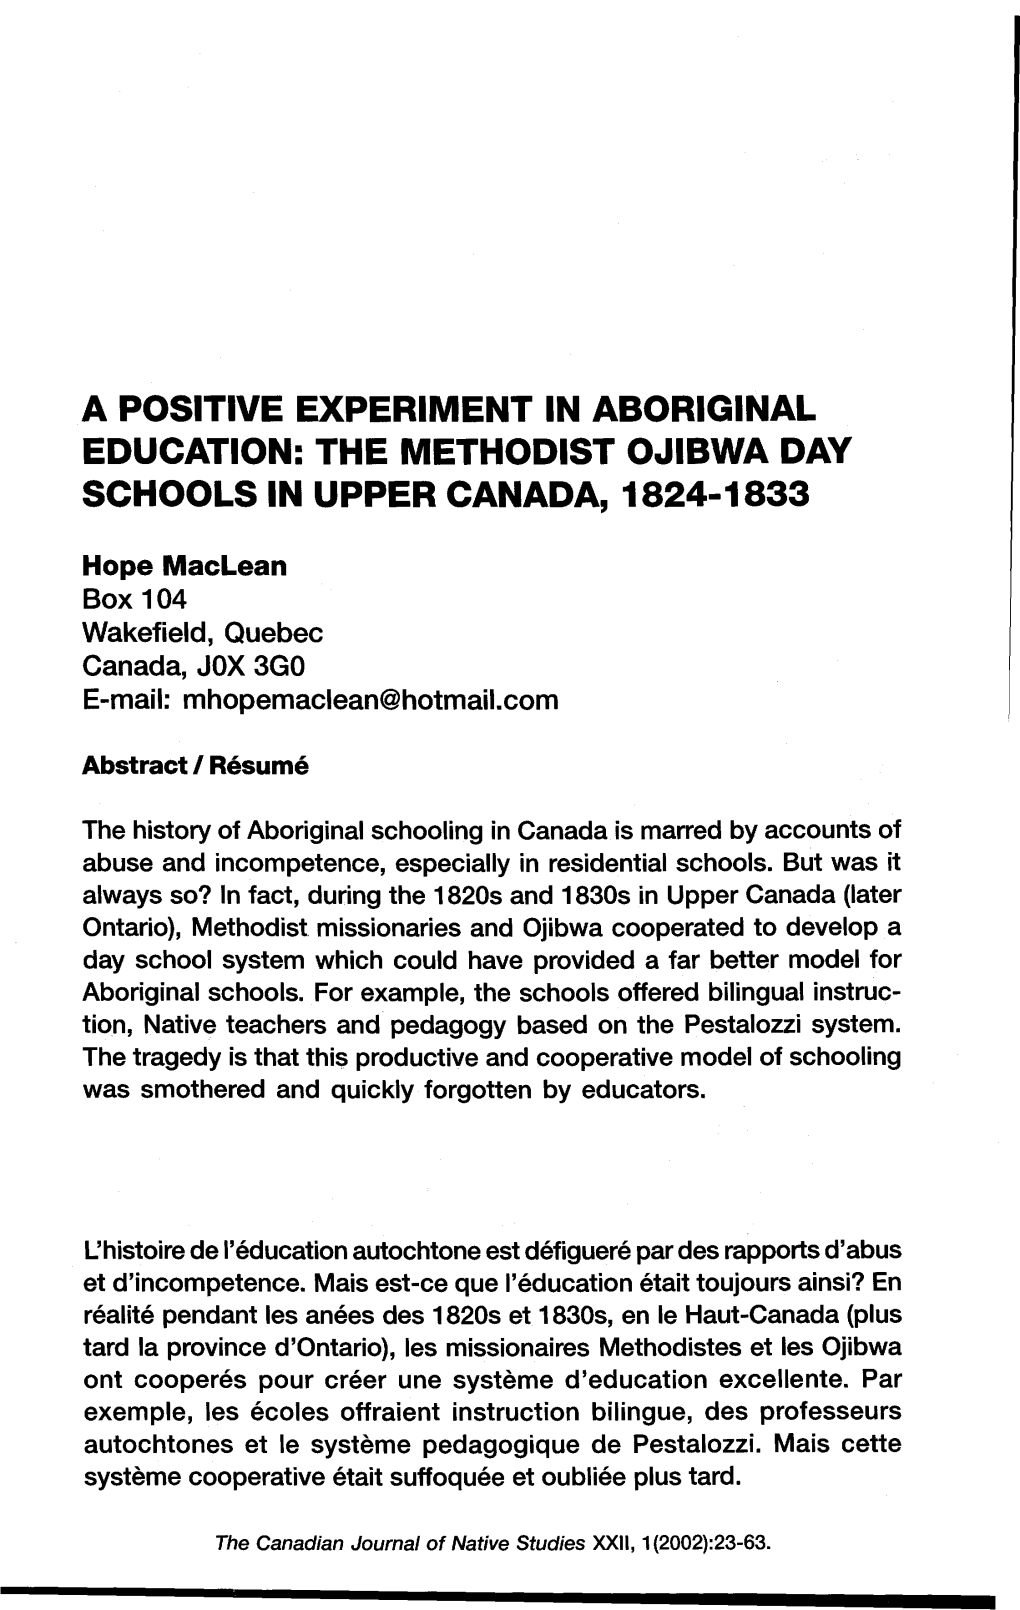 A Positive Experiment in Aboriginal Education: the Methodist Ojibwa Day Schools in Upper Canada, 1824-1833